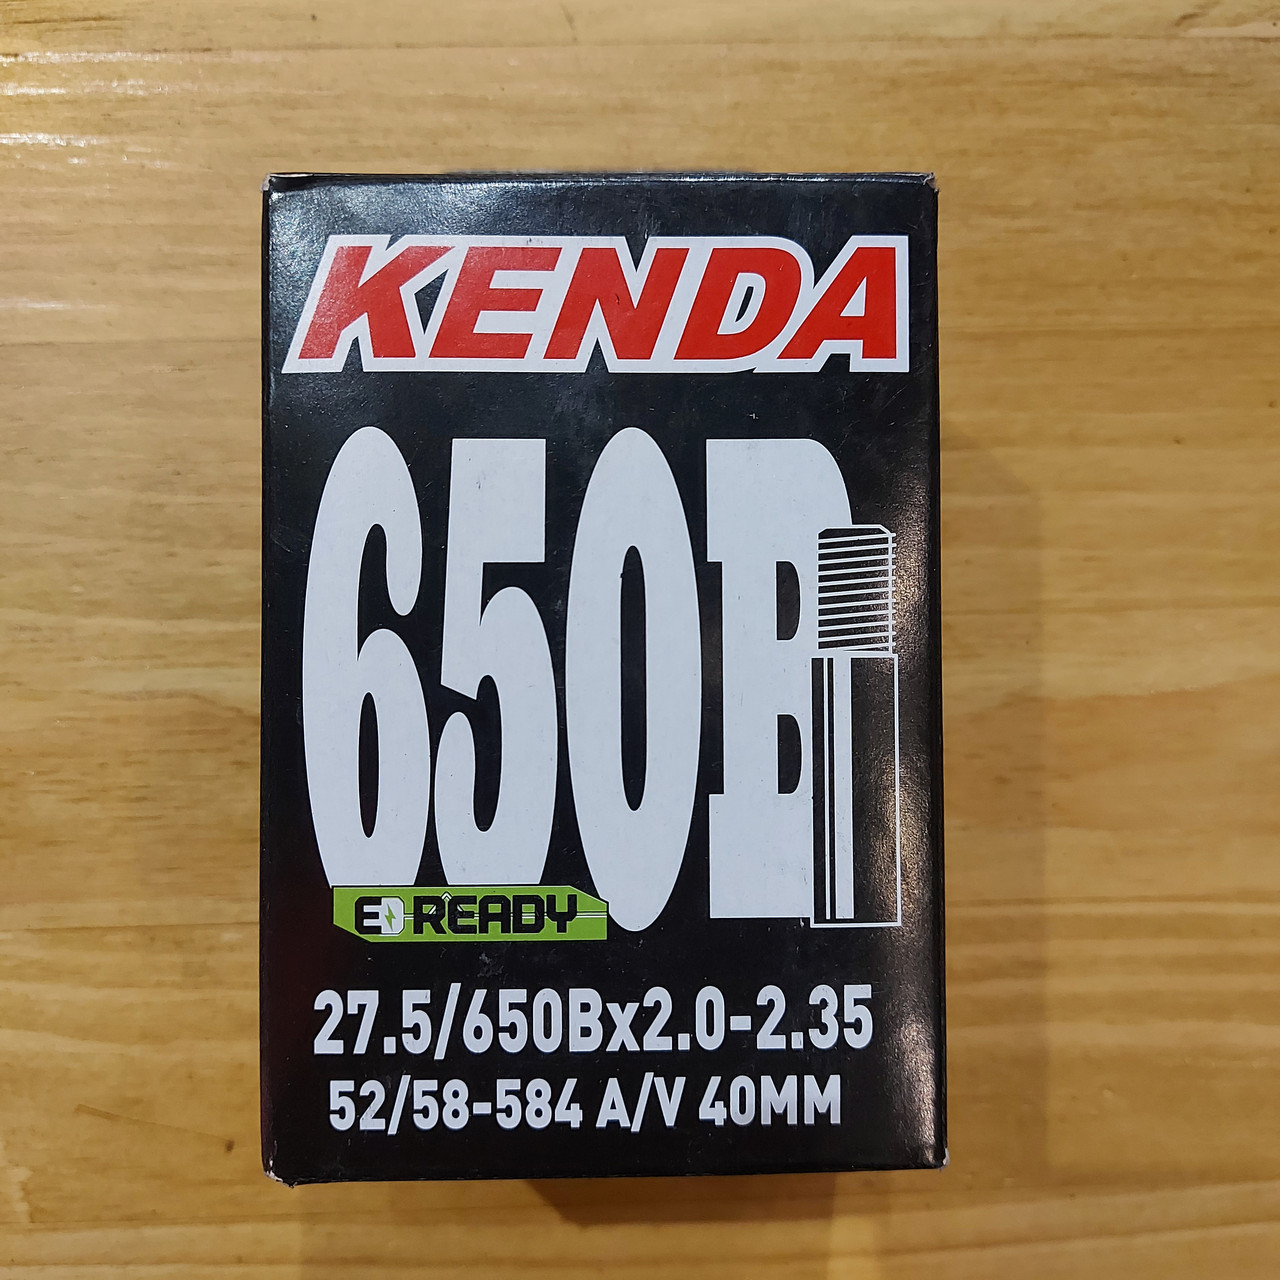 Велосипедная камера "Kenda" 27,5/650Bx2.0-2,35. 52/58-584. A/V. 40 mm. Shrader. Рассрочка. Kaspi RED